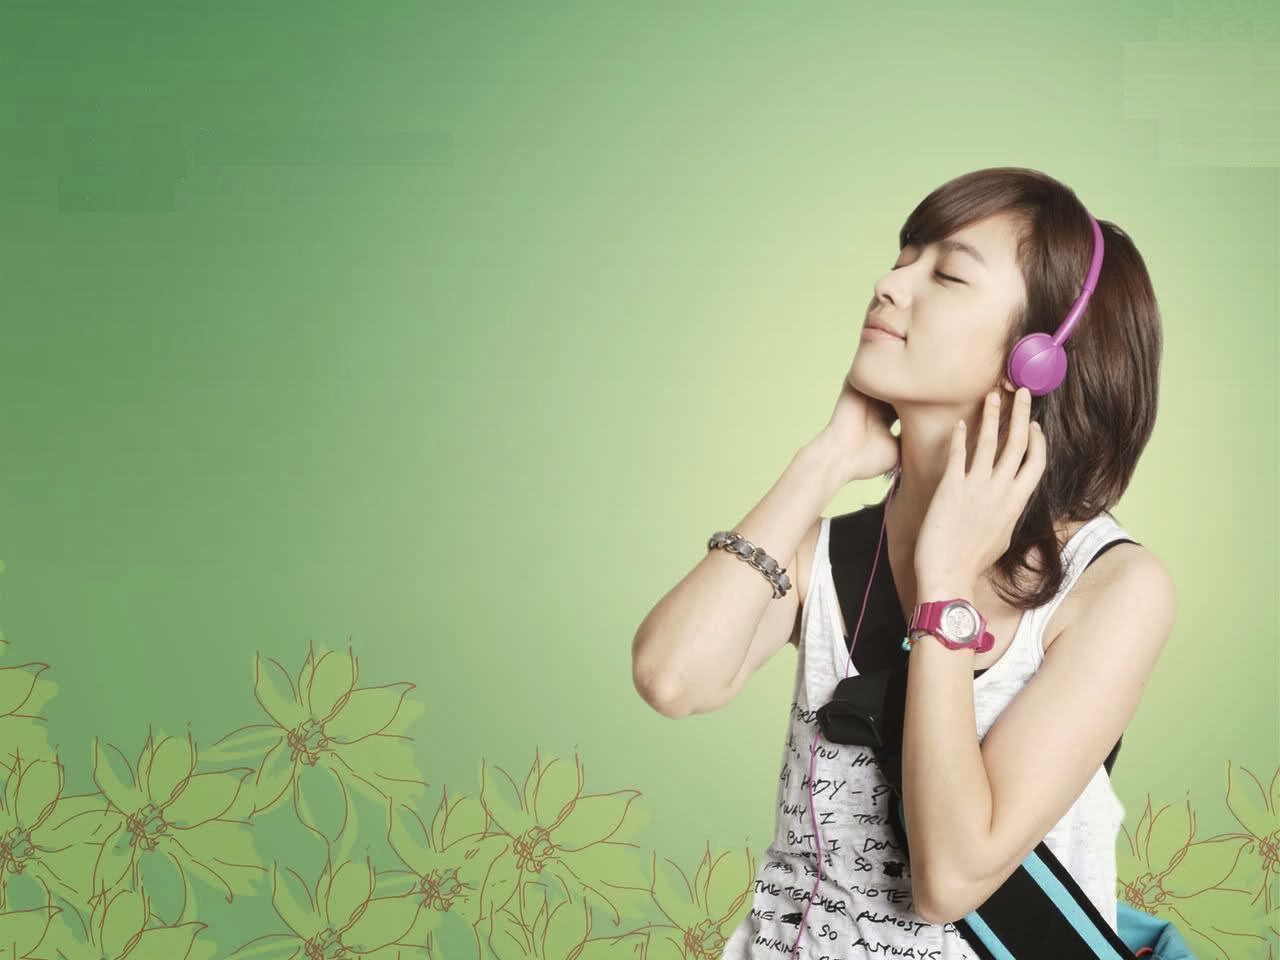 han hyo joo wallpaper,green,audio equipment,beauty,skin,nose